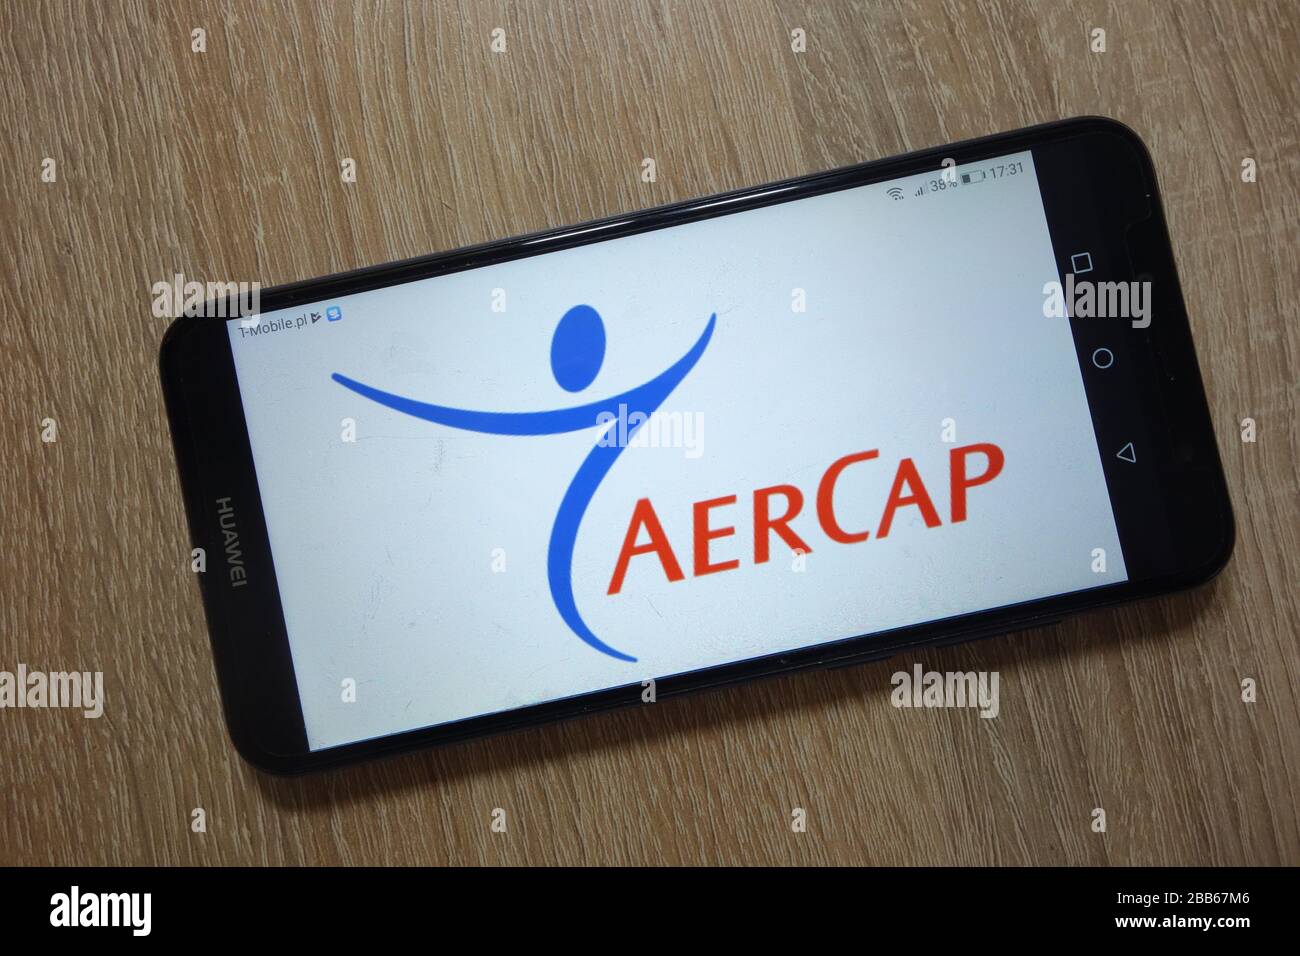 AerCap logo displayed on smartphone Stock Photo